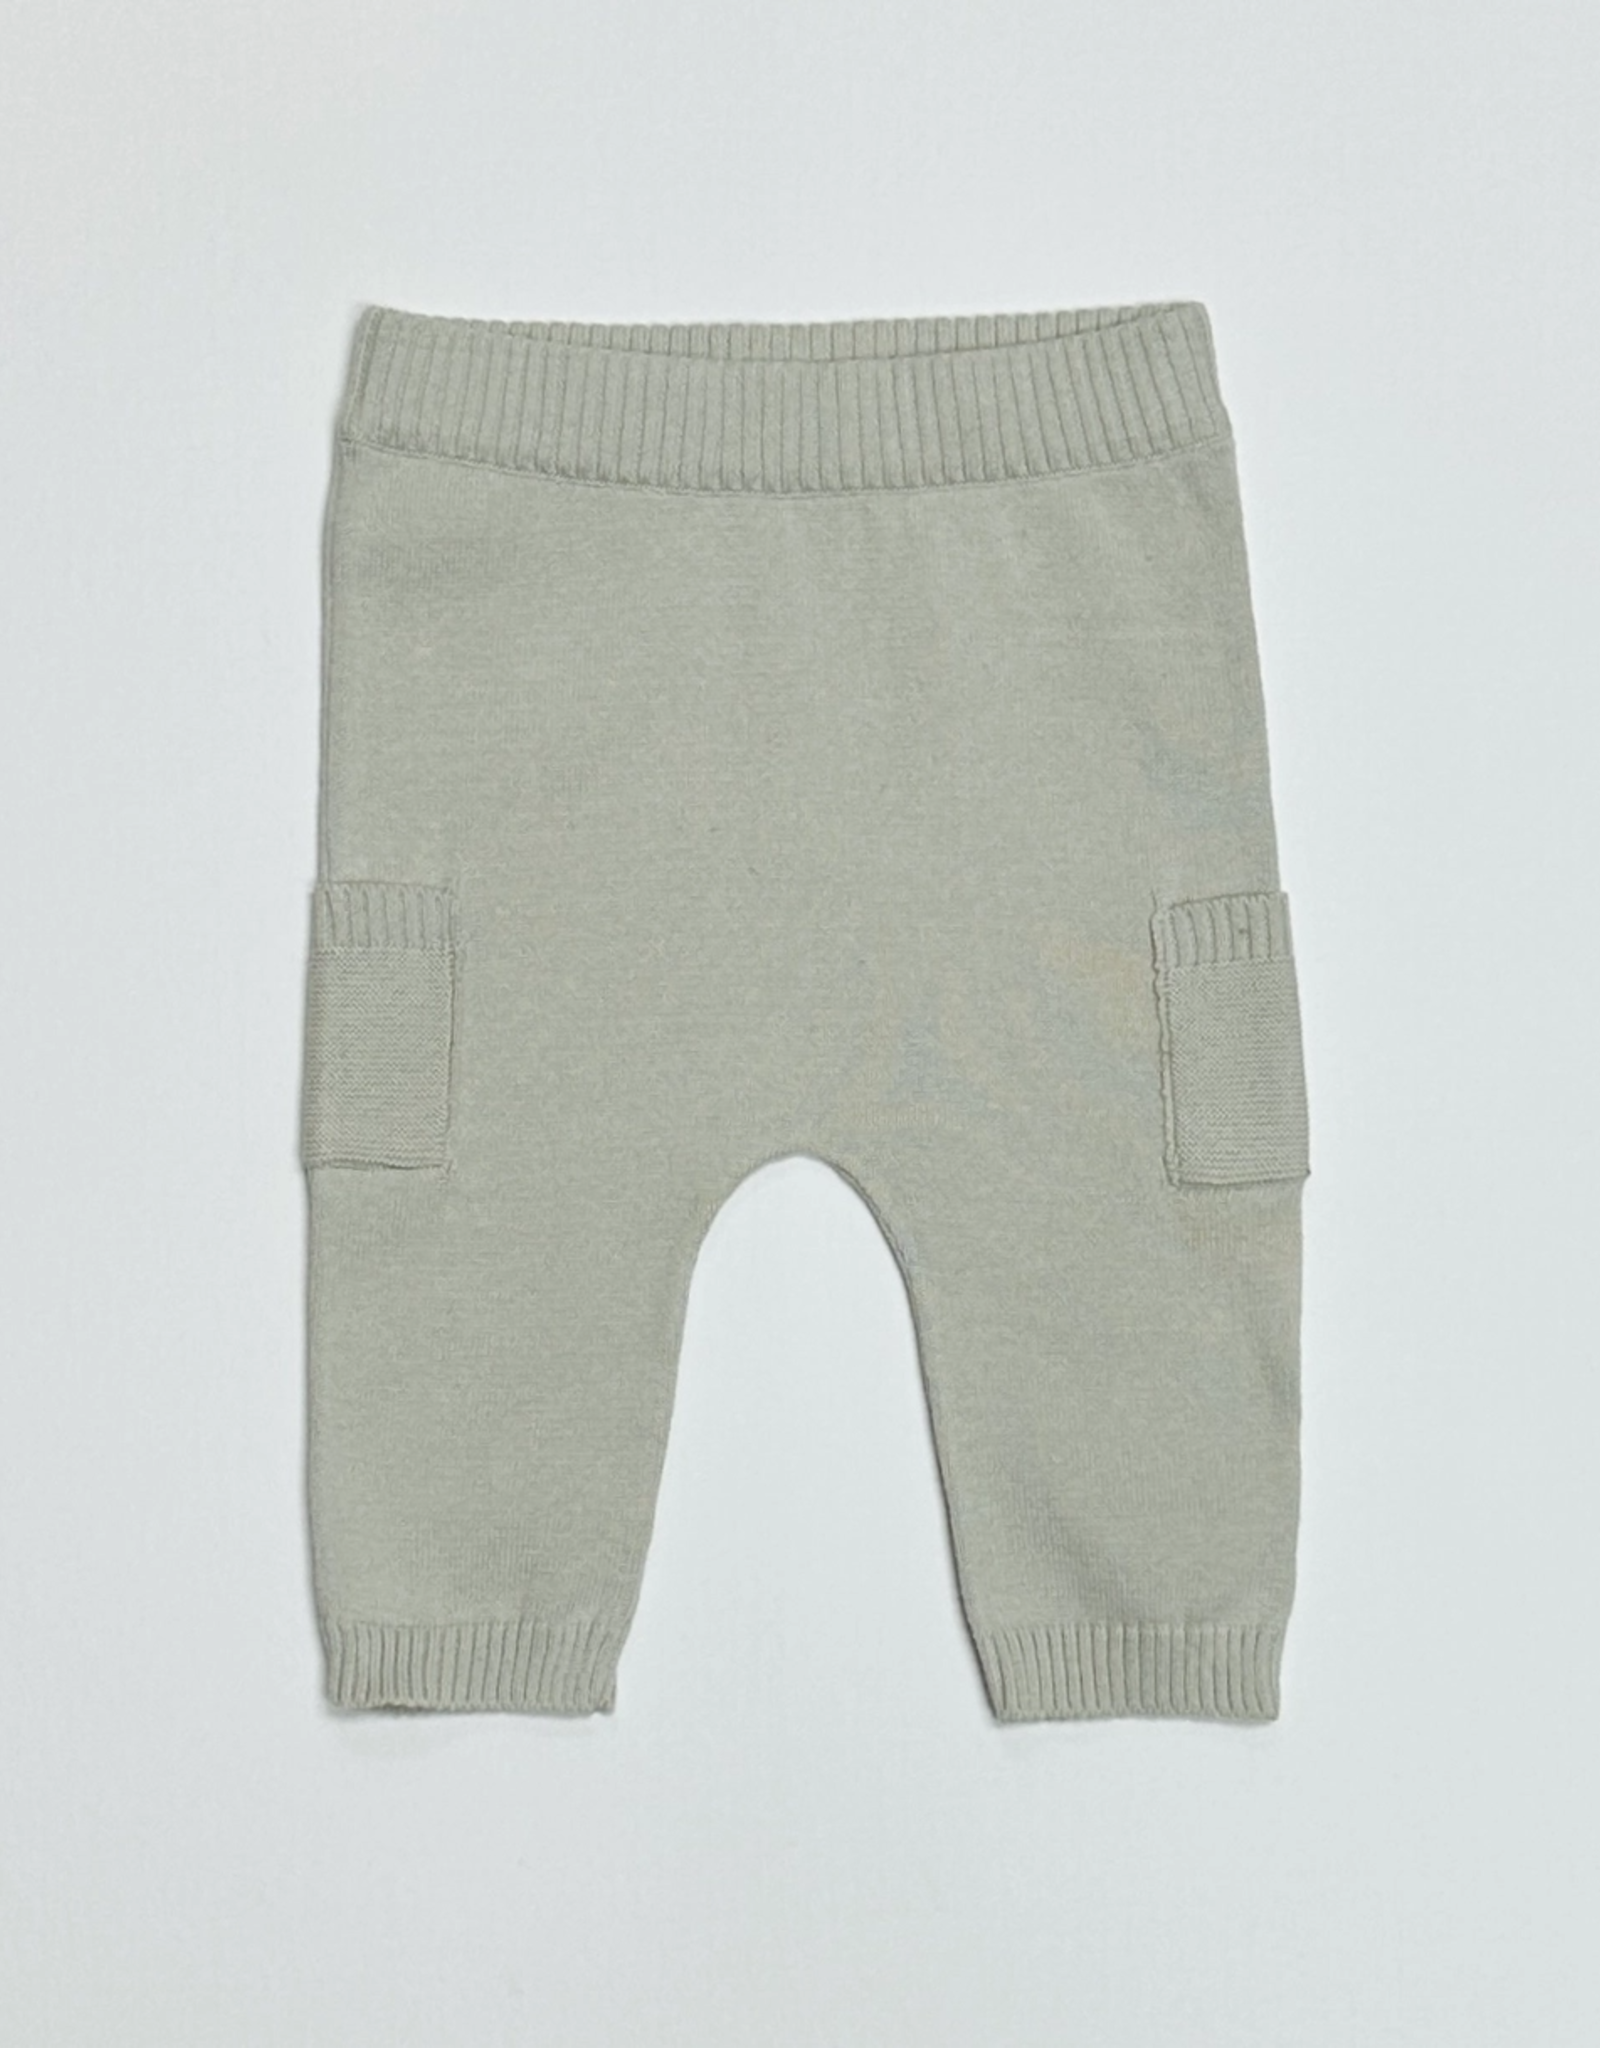 Viverano Baby Side Pocket Sweater Knit Pants- Stone